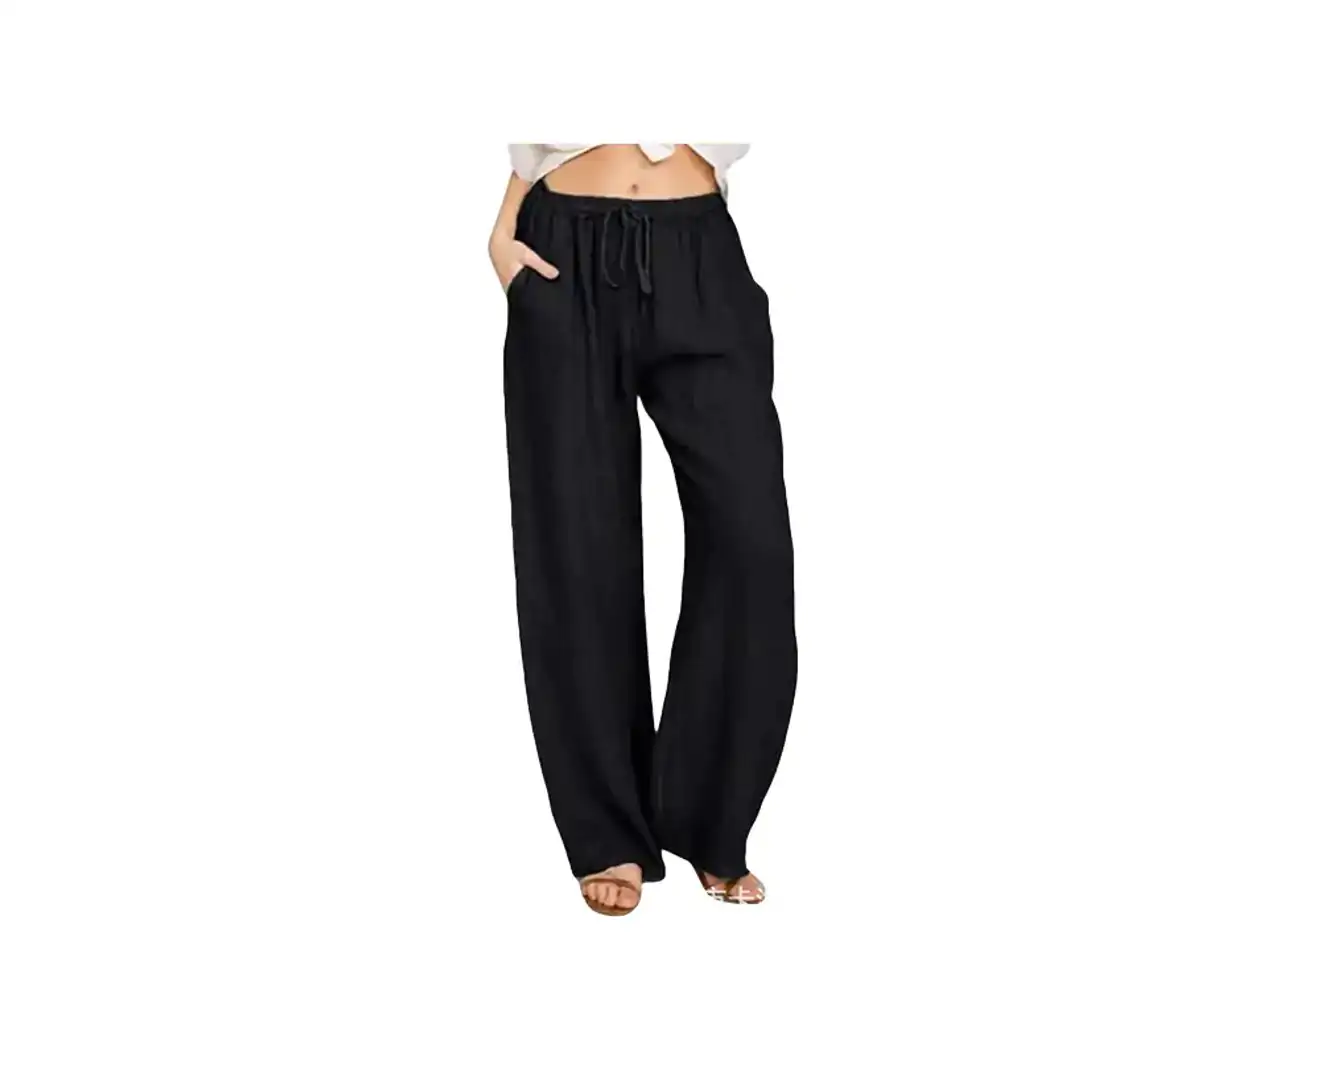 Biwiti Women'S Cotton Linen Pants Casual Drawstring Loose Elastic Waist  Beach Pant Trousers with Pockets -Black